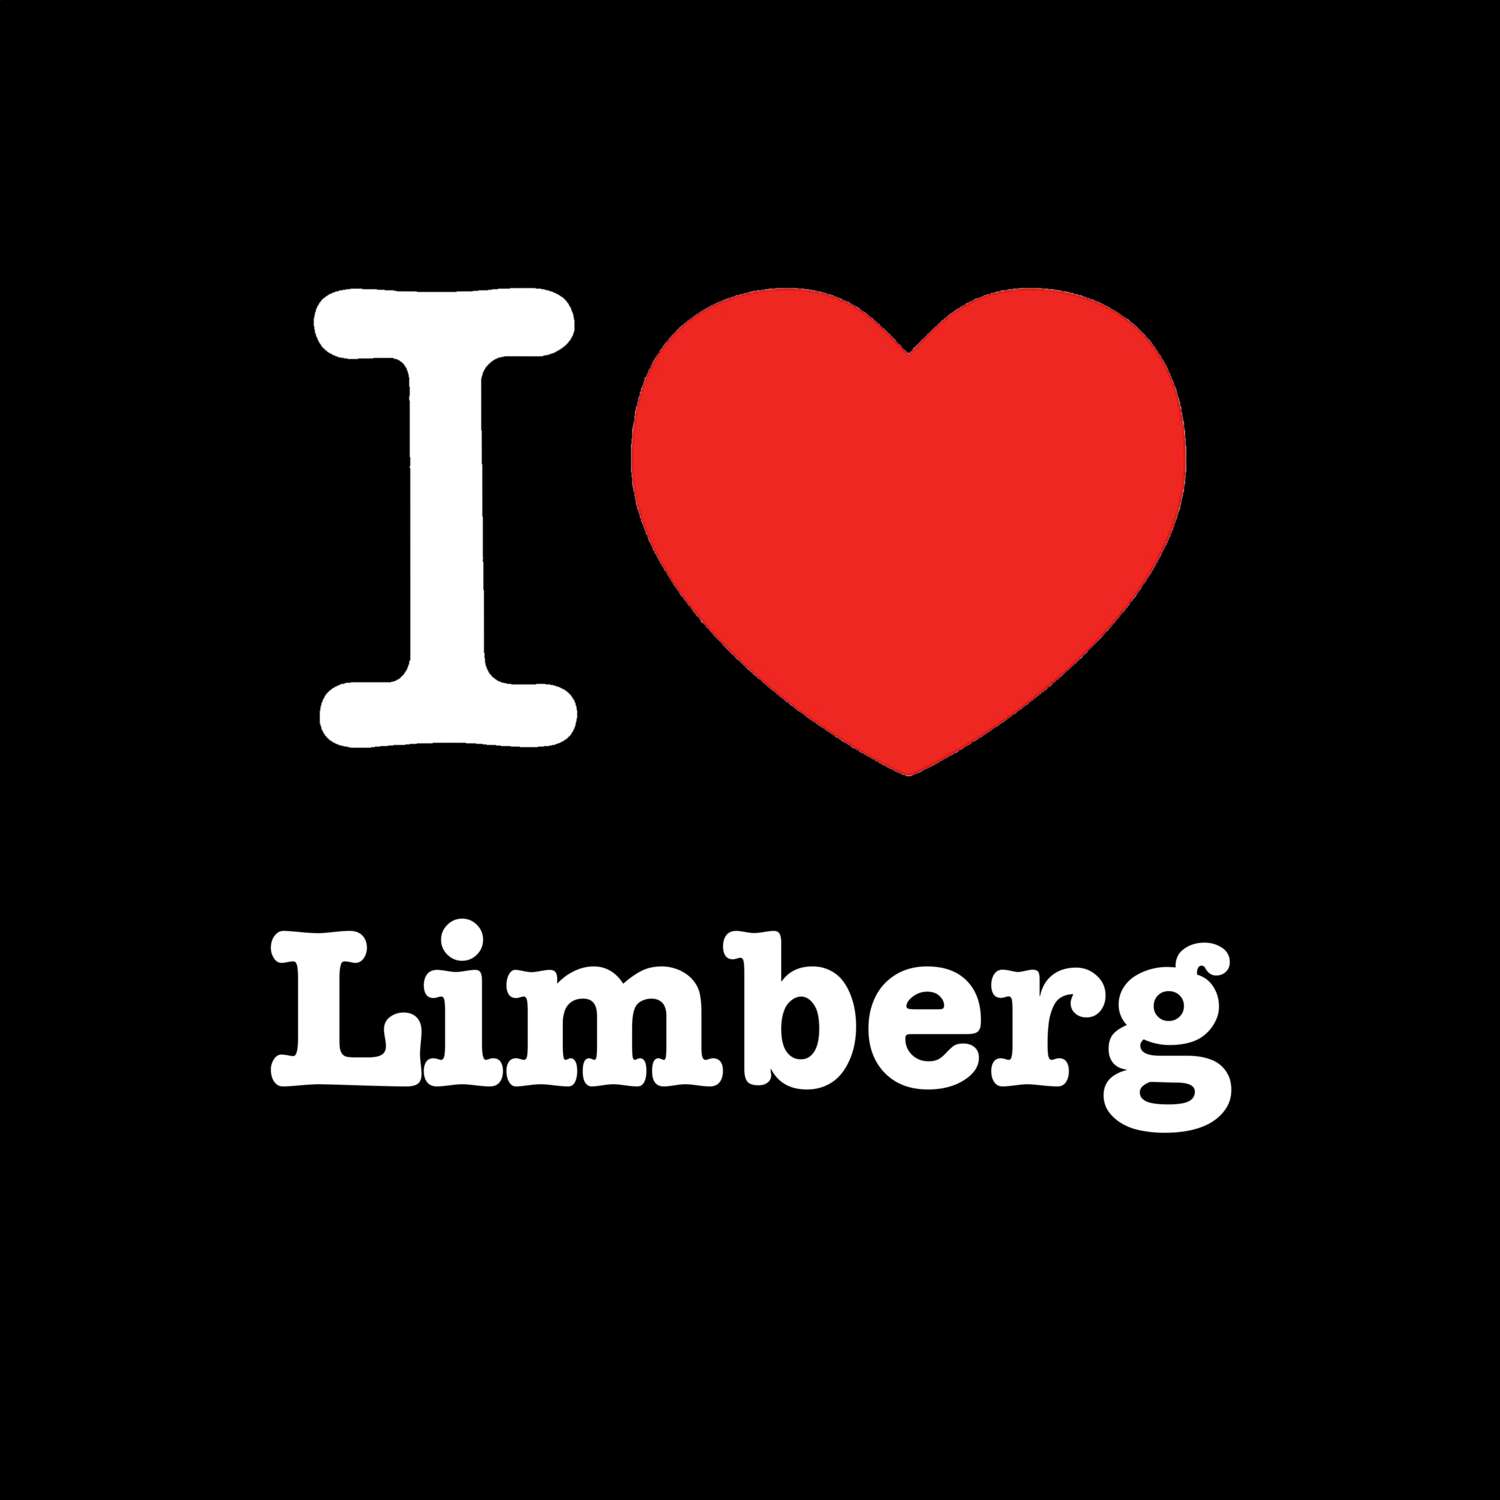 Limberg T-Shirt »I love«